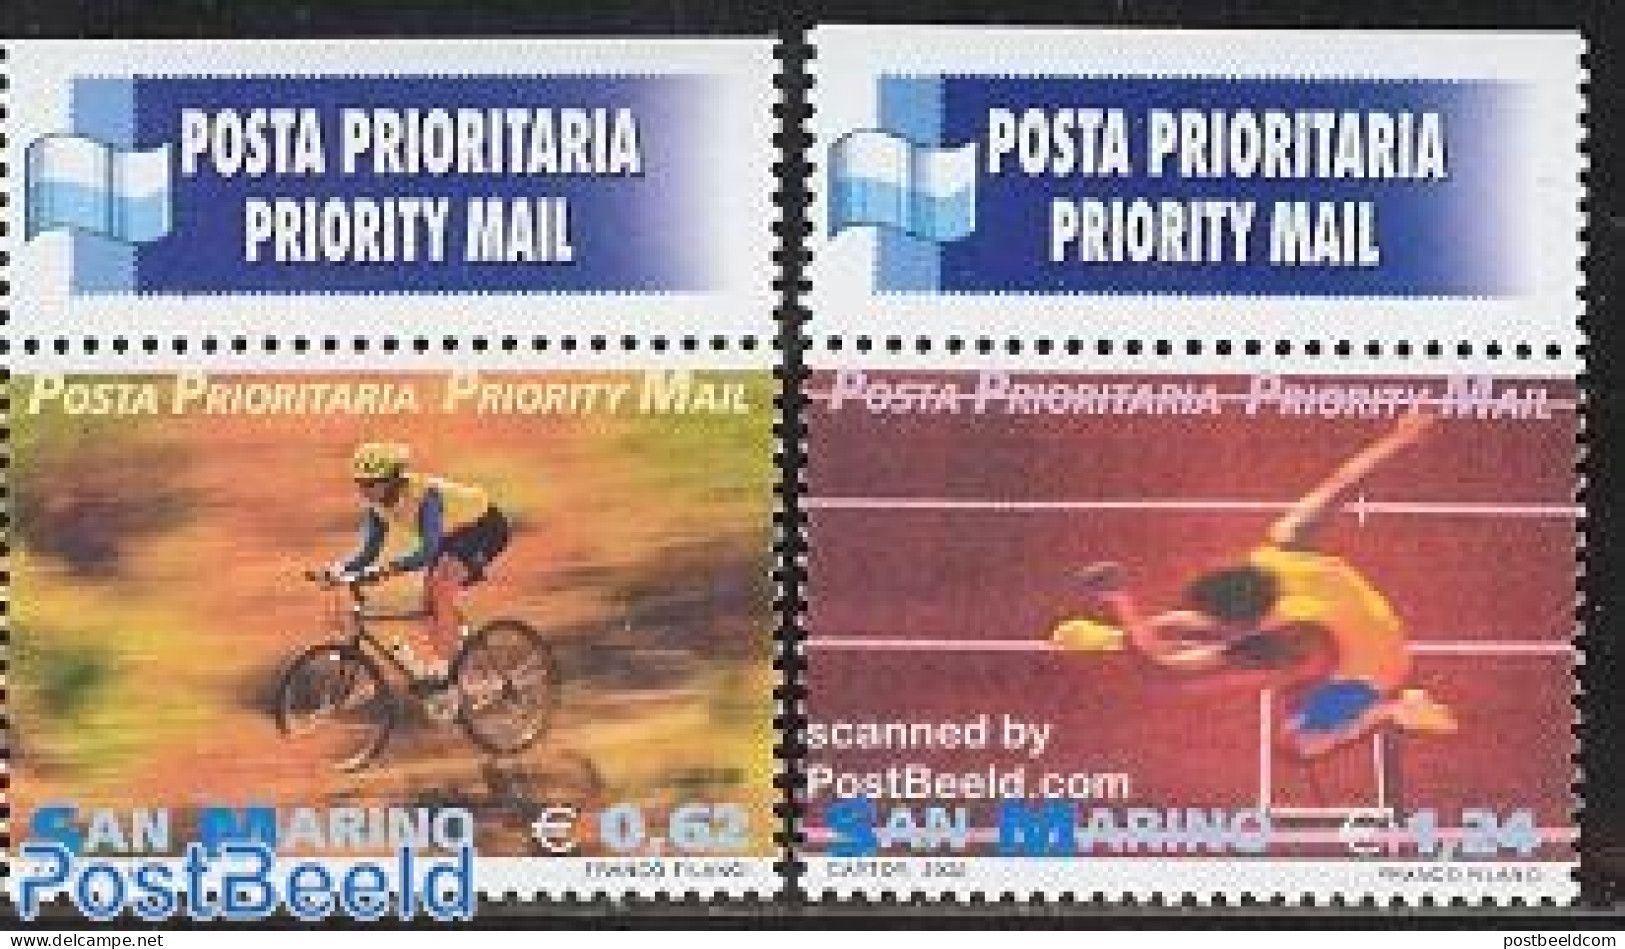 San Marino 2002 Sports, Priority 2v+priority Tab, Mint NH, Sport - Athletics - Cycling - Nuevos